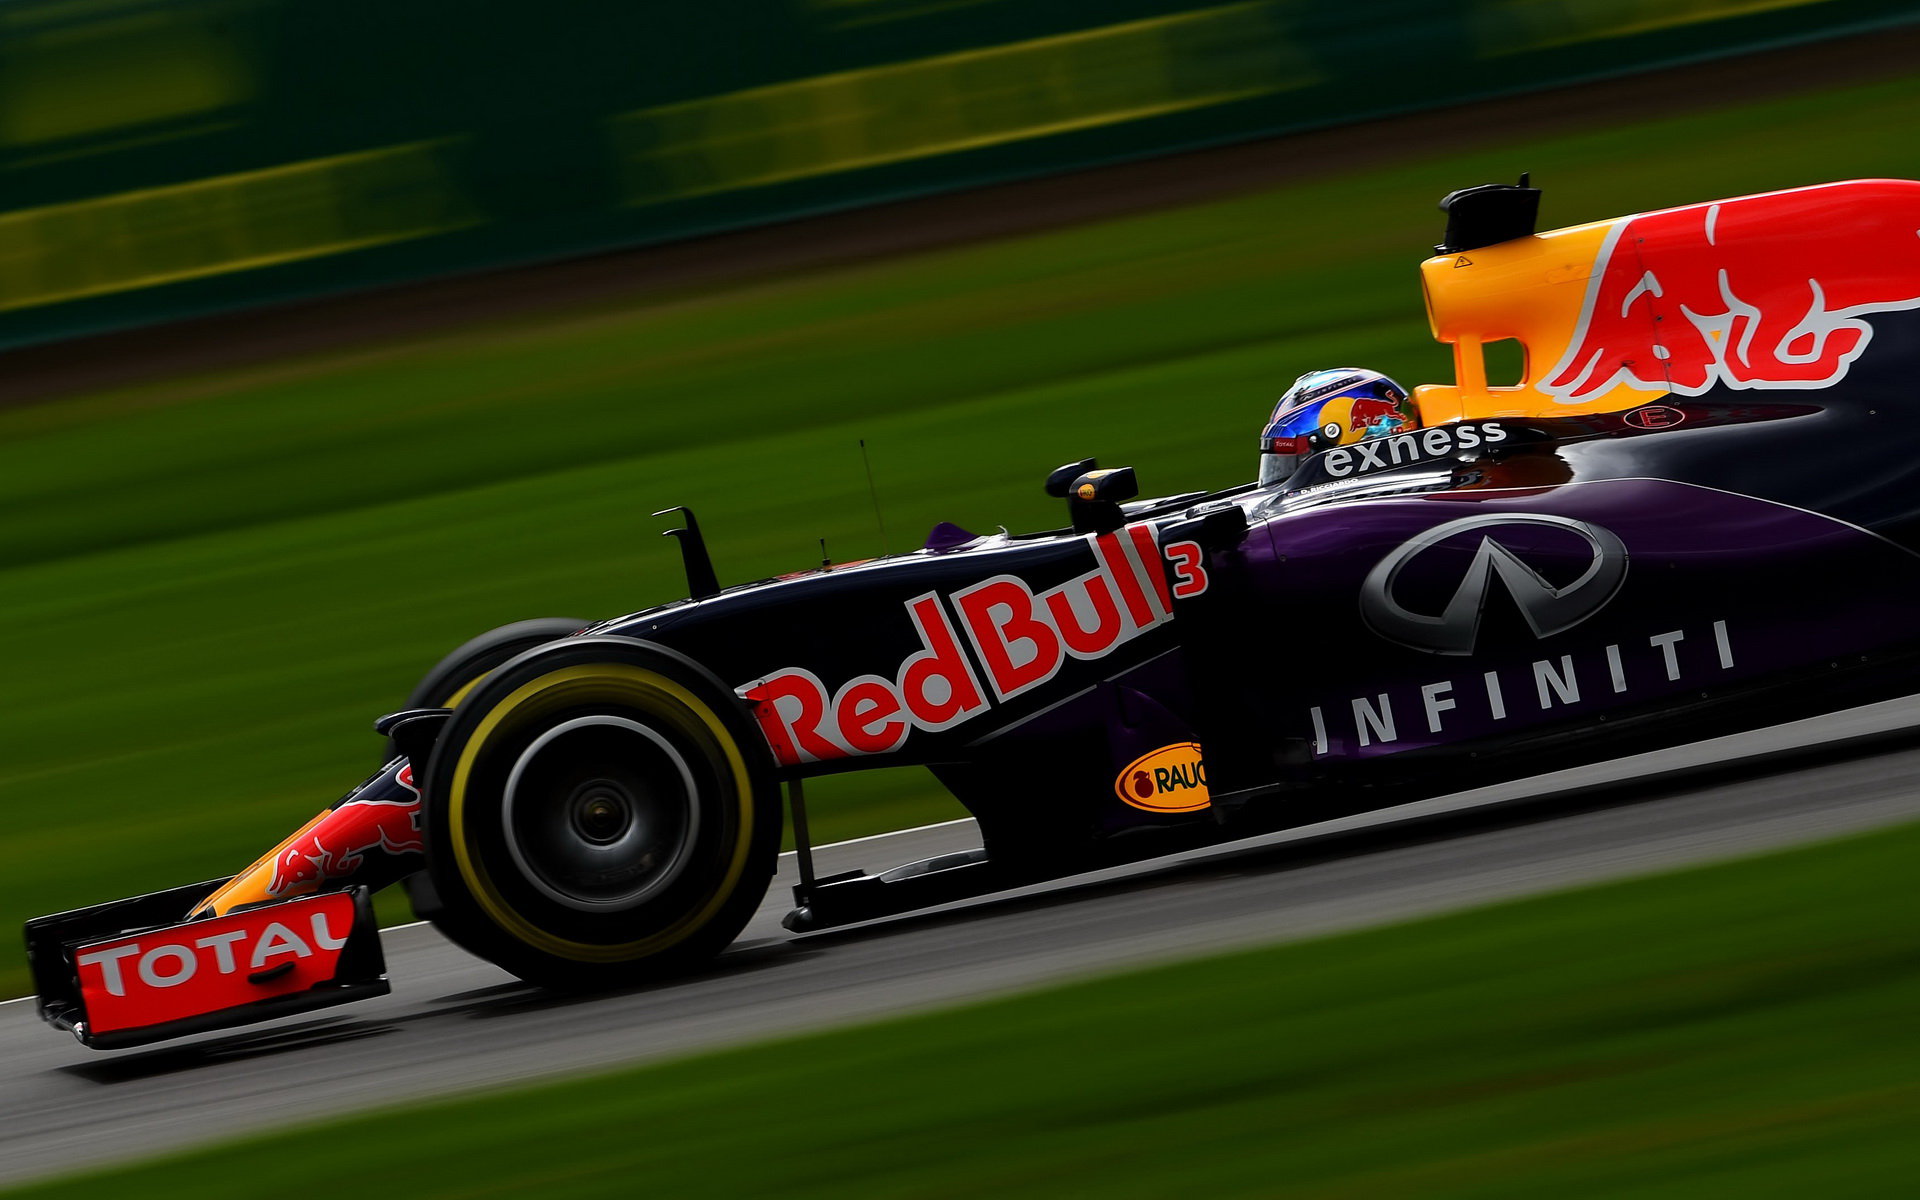 Bude Red Bull pokračovat s Renaultem?